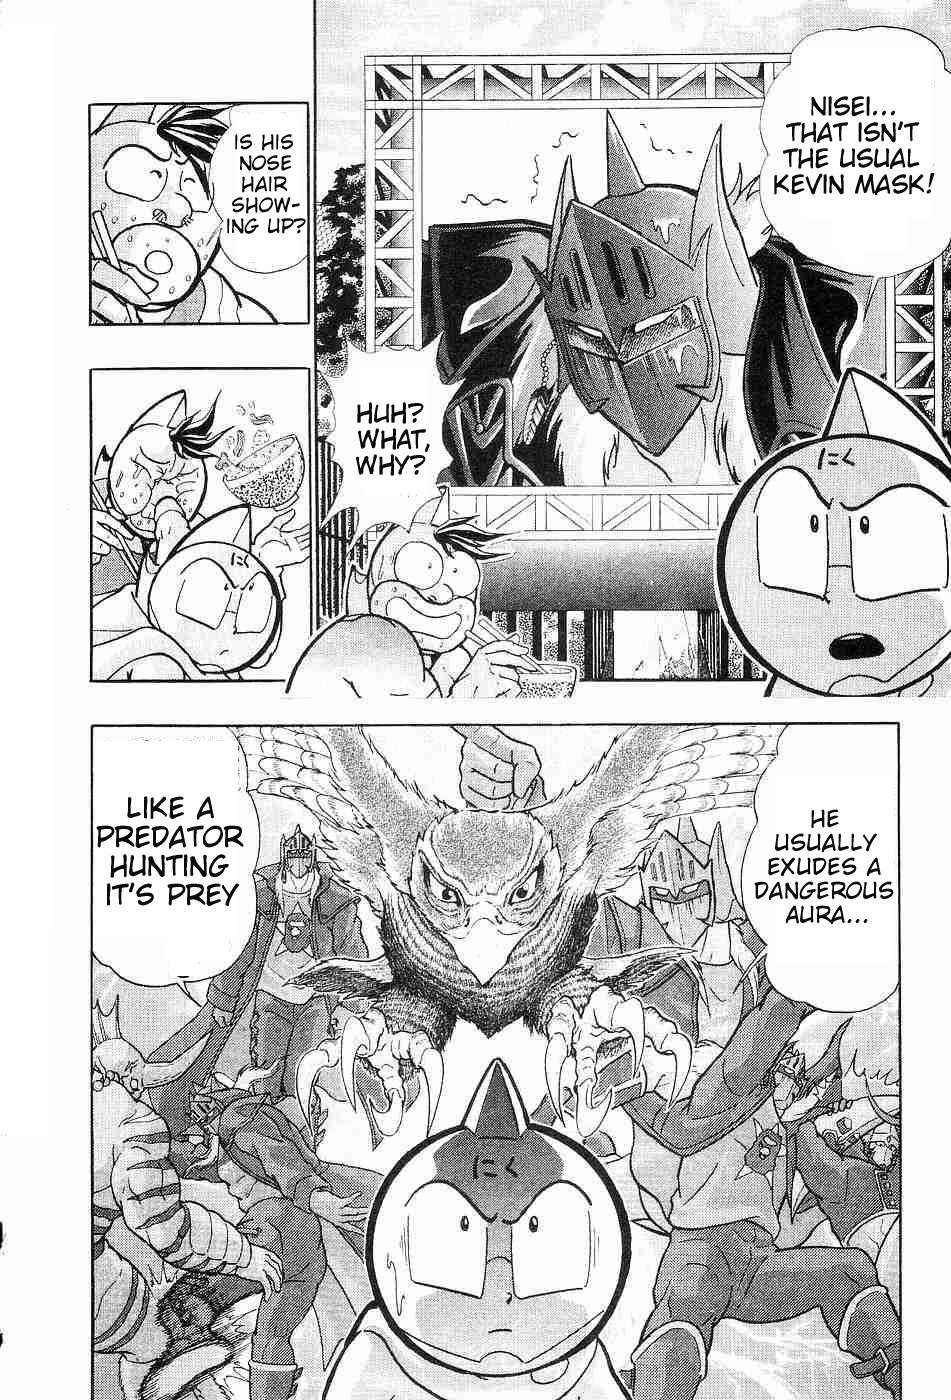 Kinnikuman II Sei - 2nd Generation - chapter 152 - #6